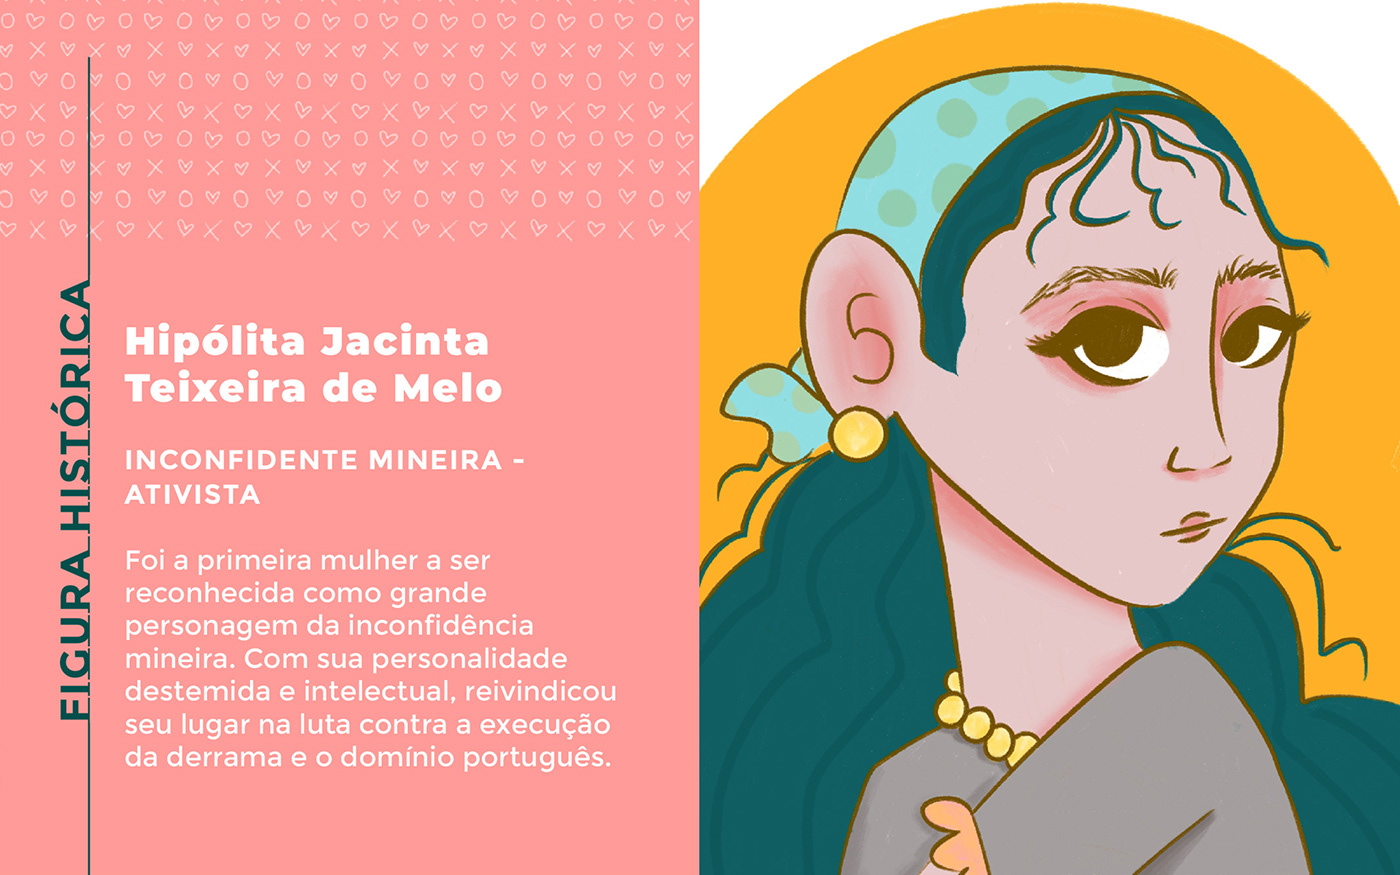 An illustrated portrait of Hipólita Jacinta an important brazilian historical figure.